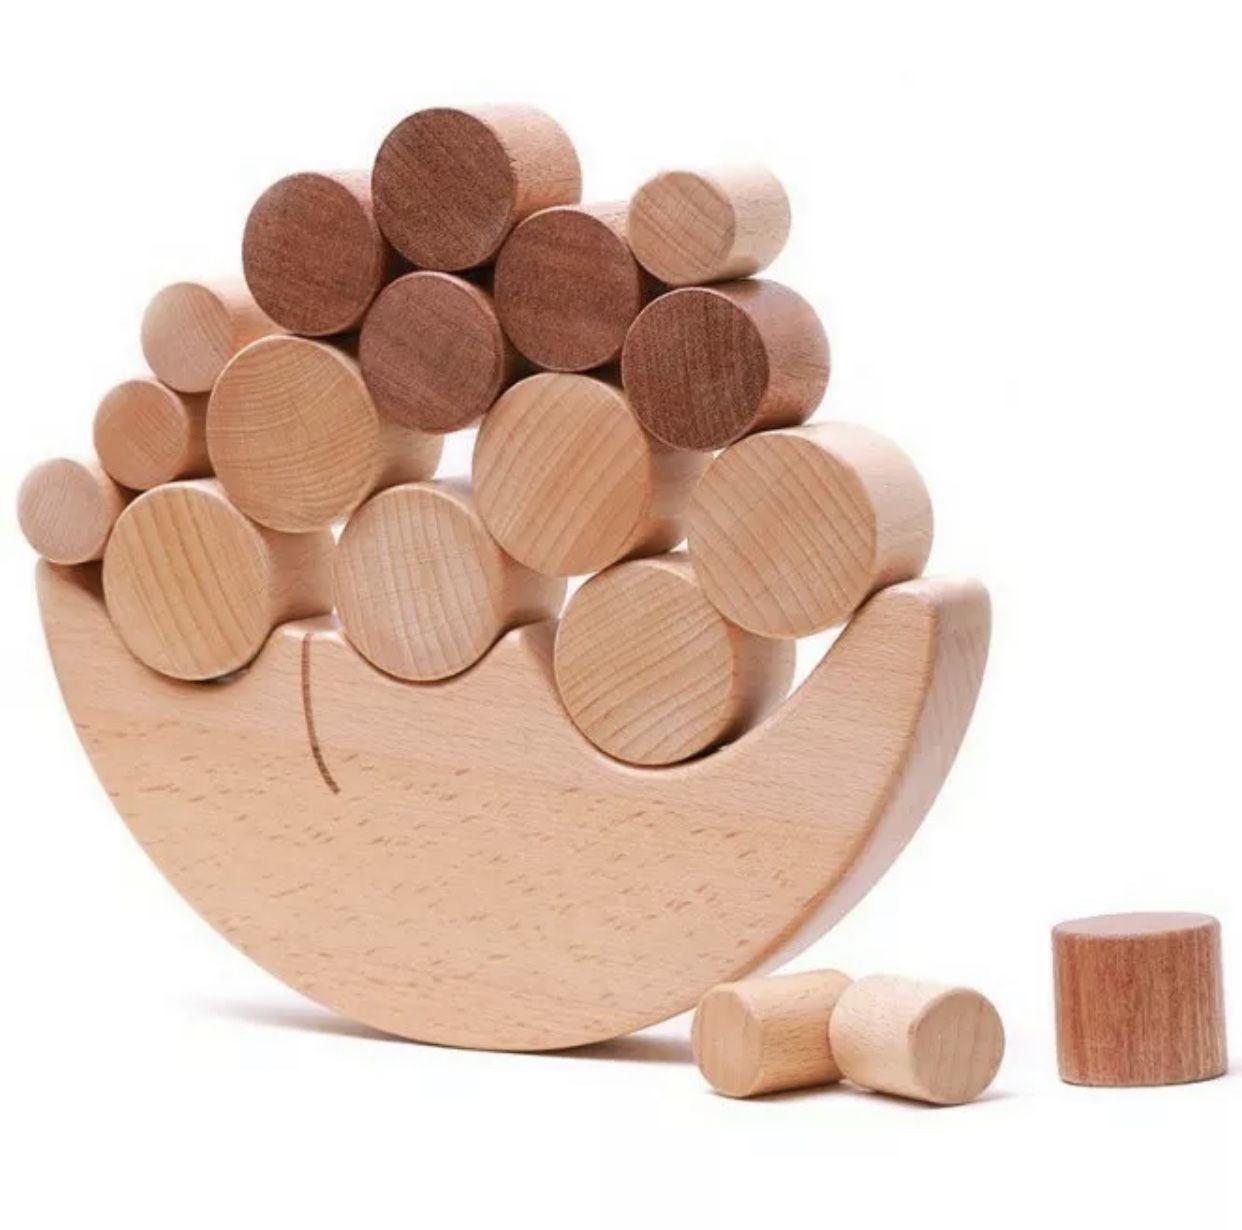 Wooden Montessori Moon Blocks Balance Game Toys Kids Educational.